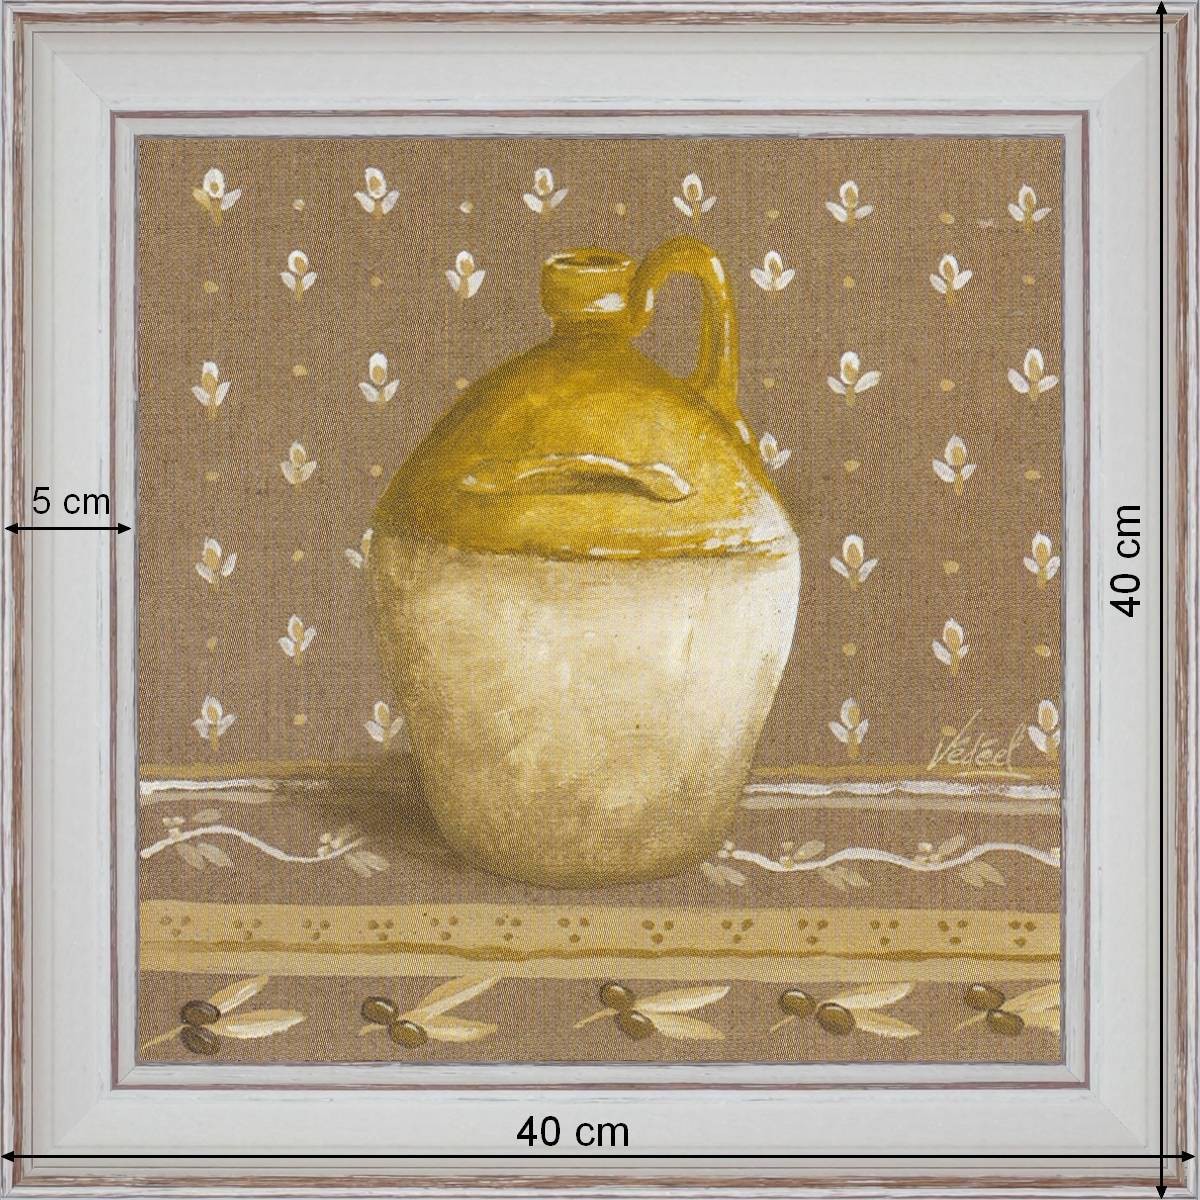 Yellow jug on flax - dimension 40 x 40 cm - White